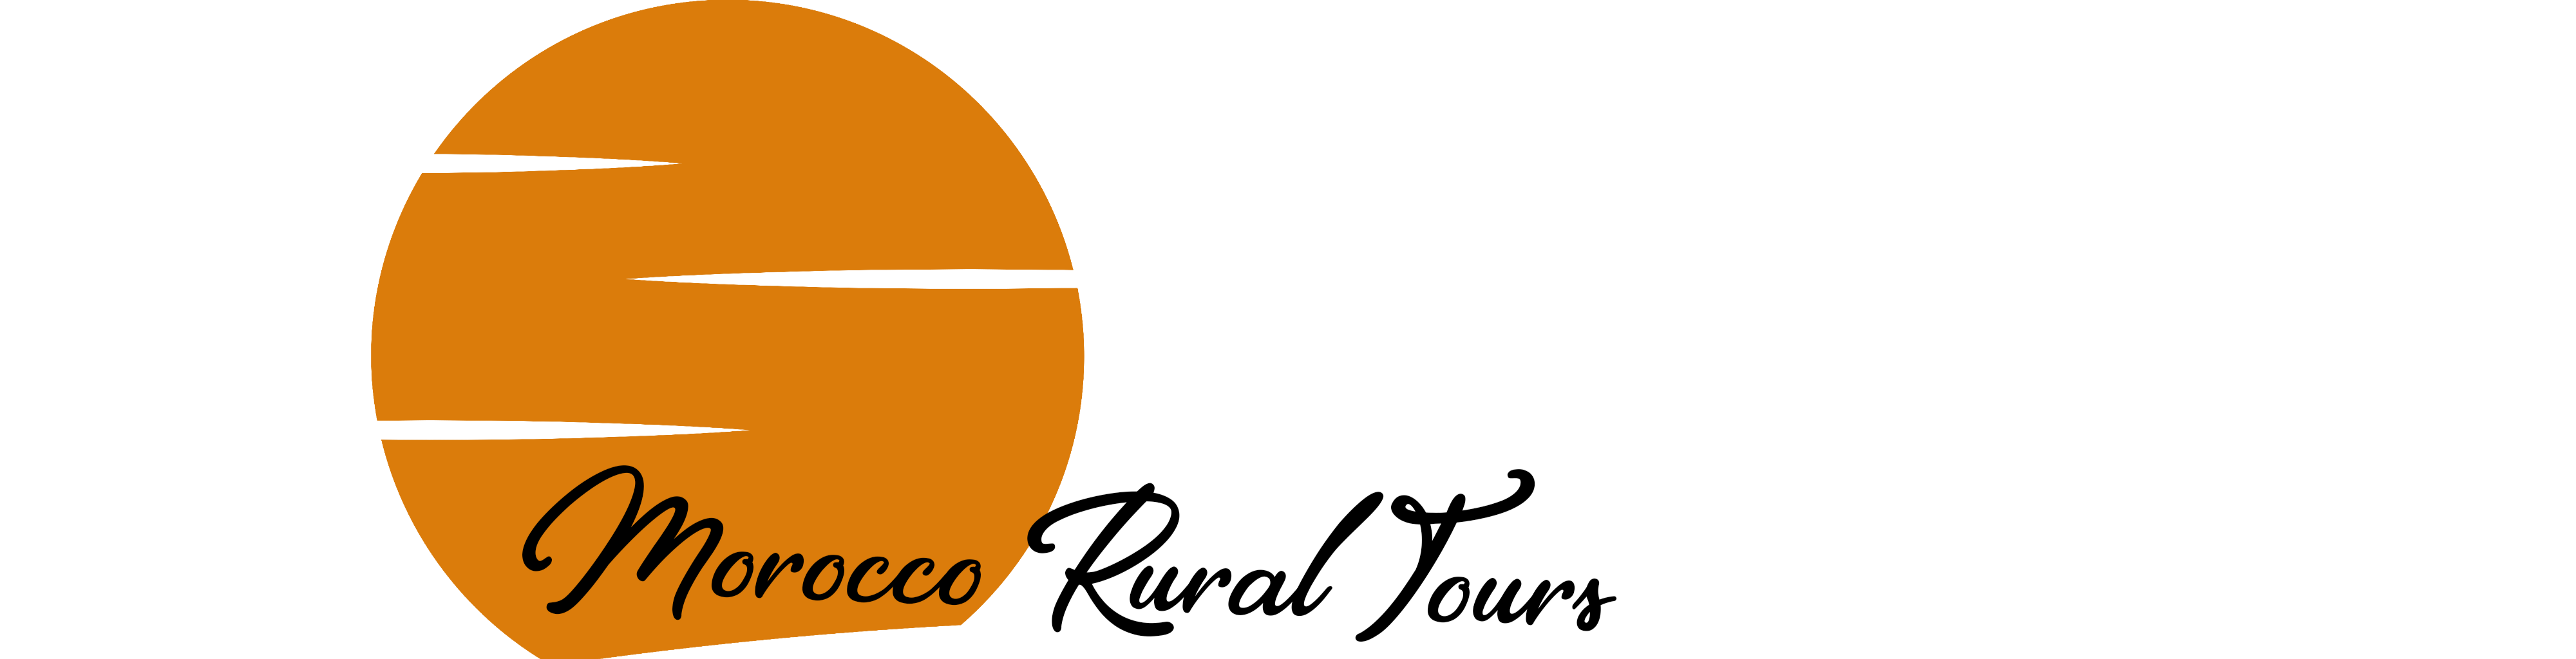 Morocco Rural Tours